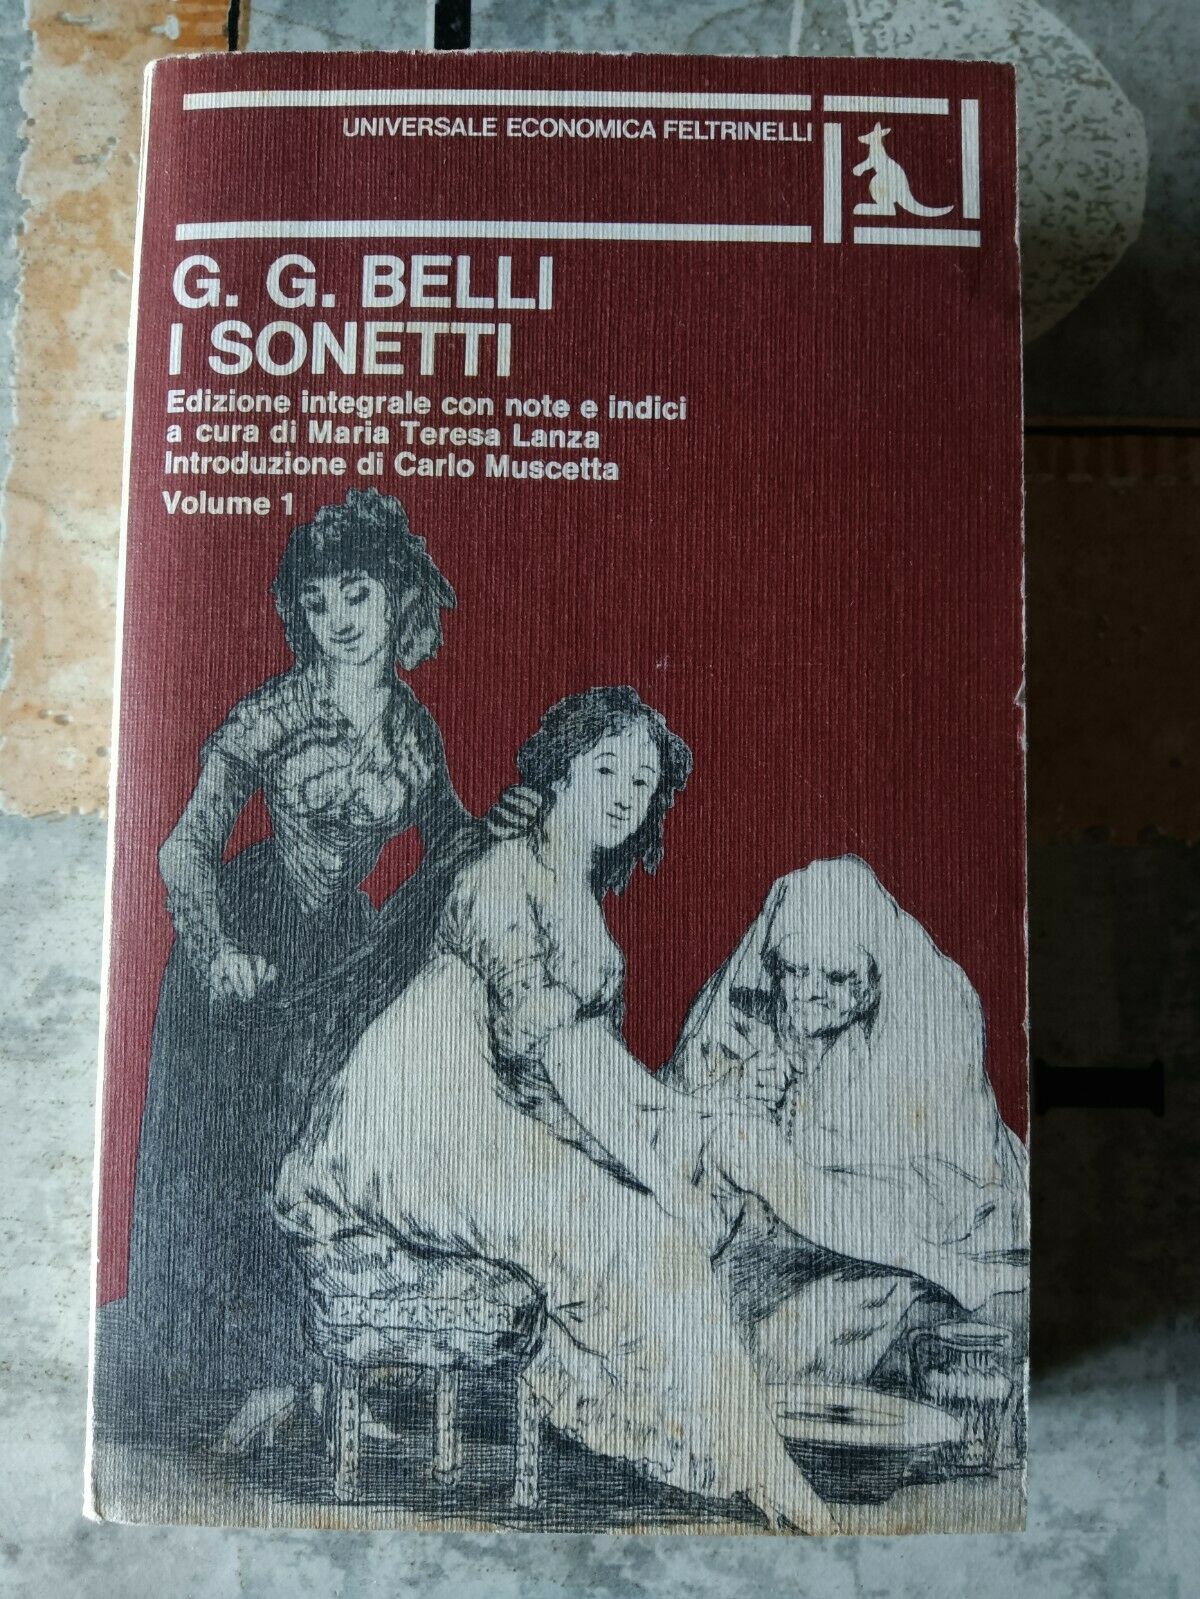 I SONETTI Vol. 1 | G.G.BELLI - Feltrinelli